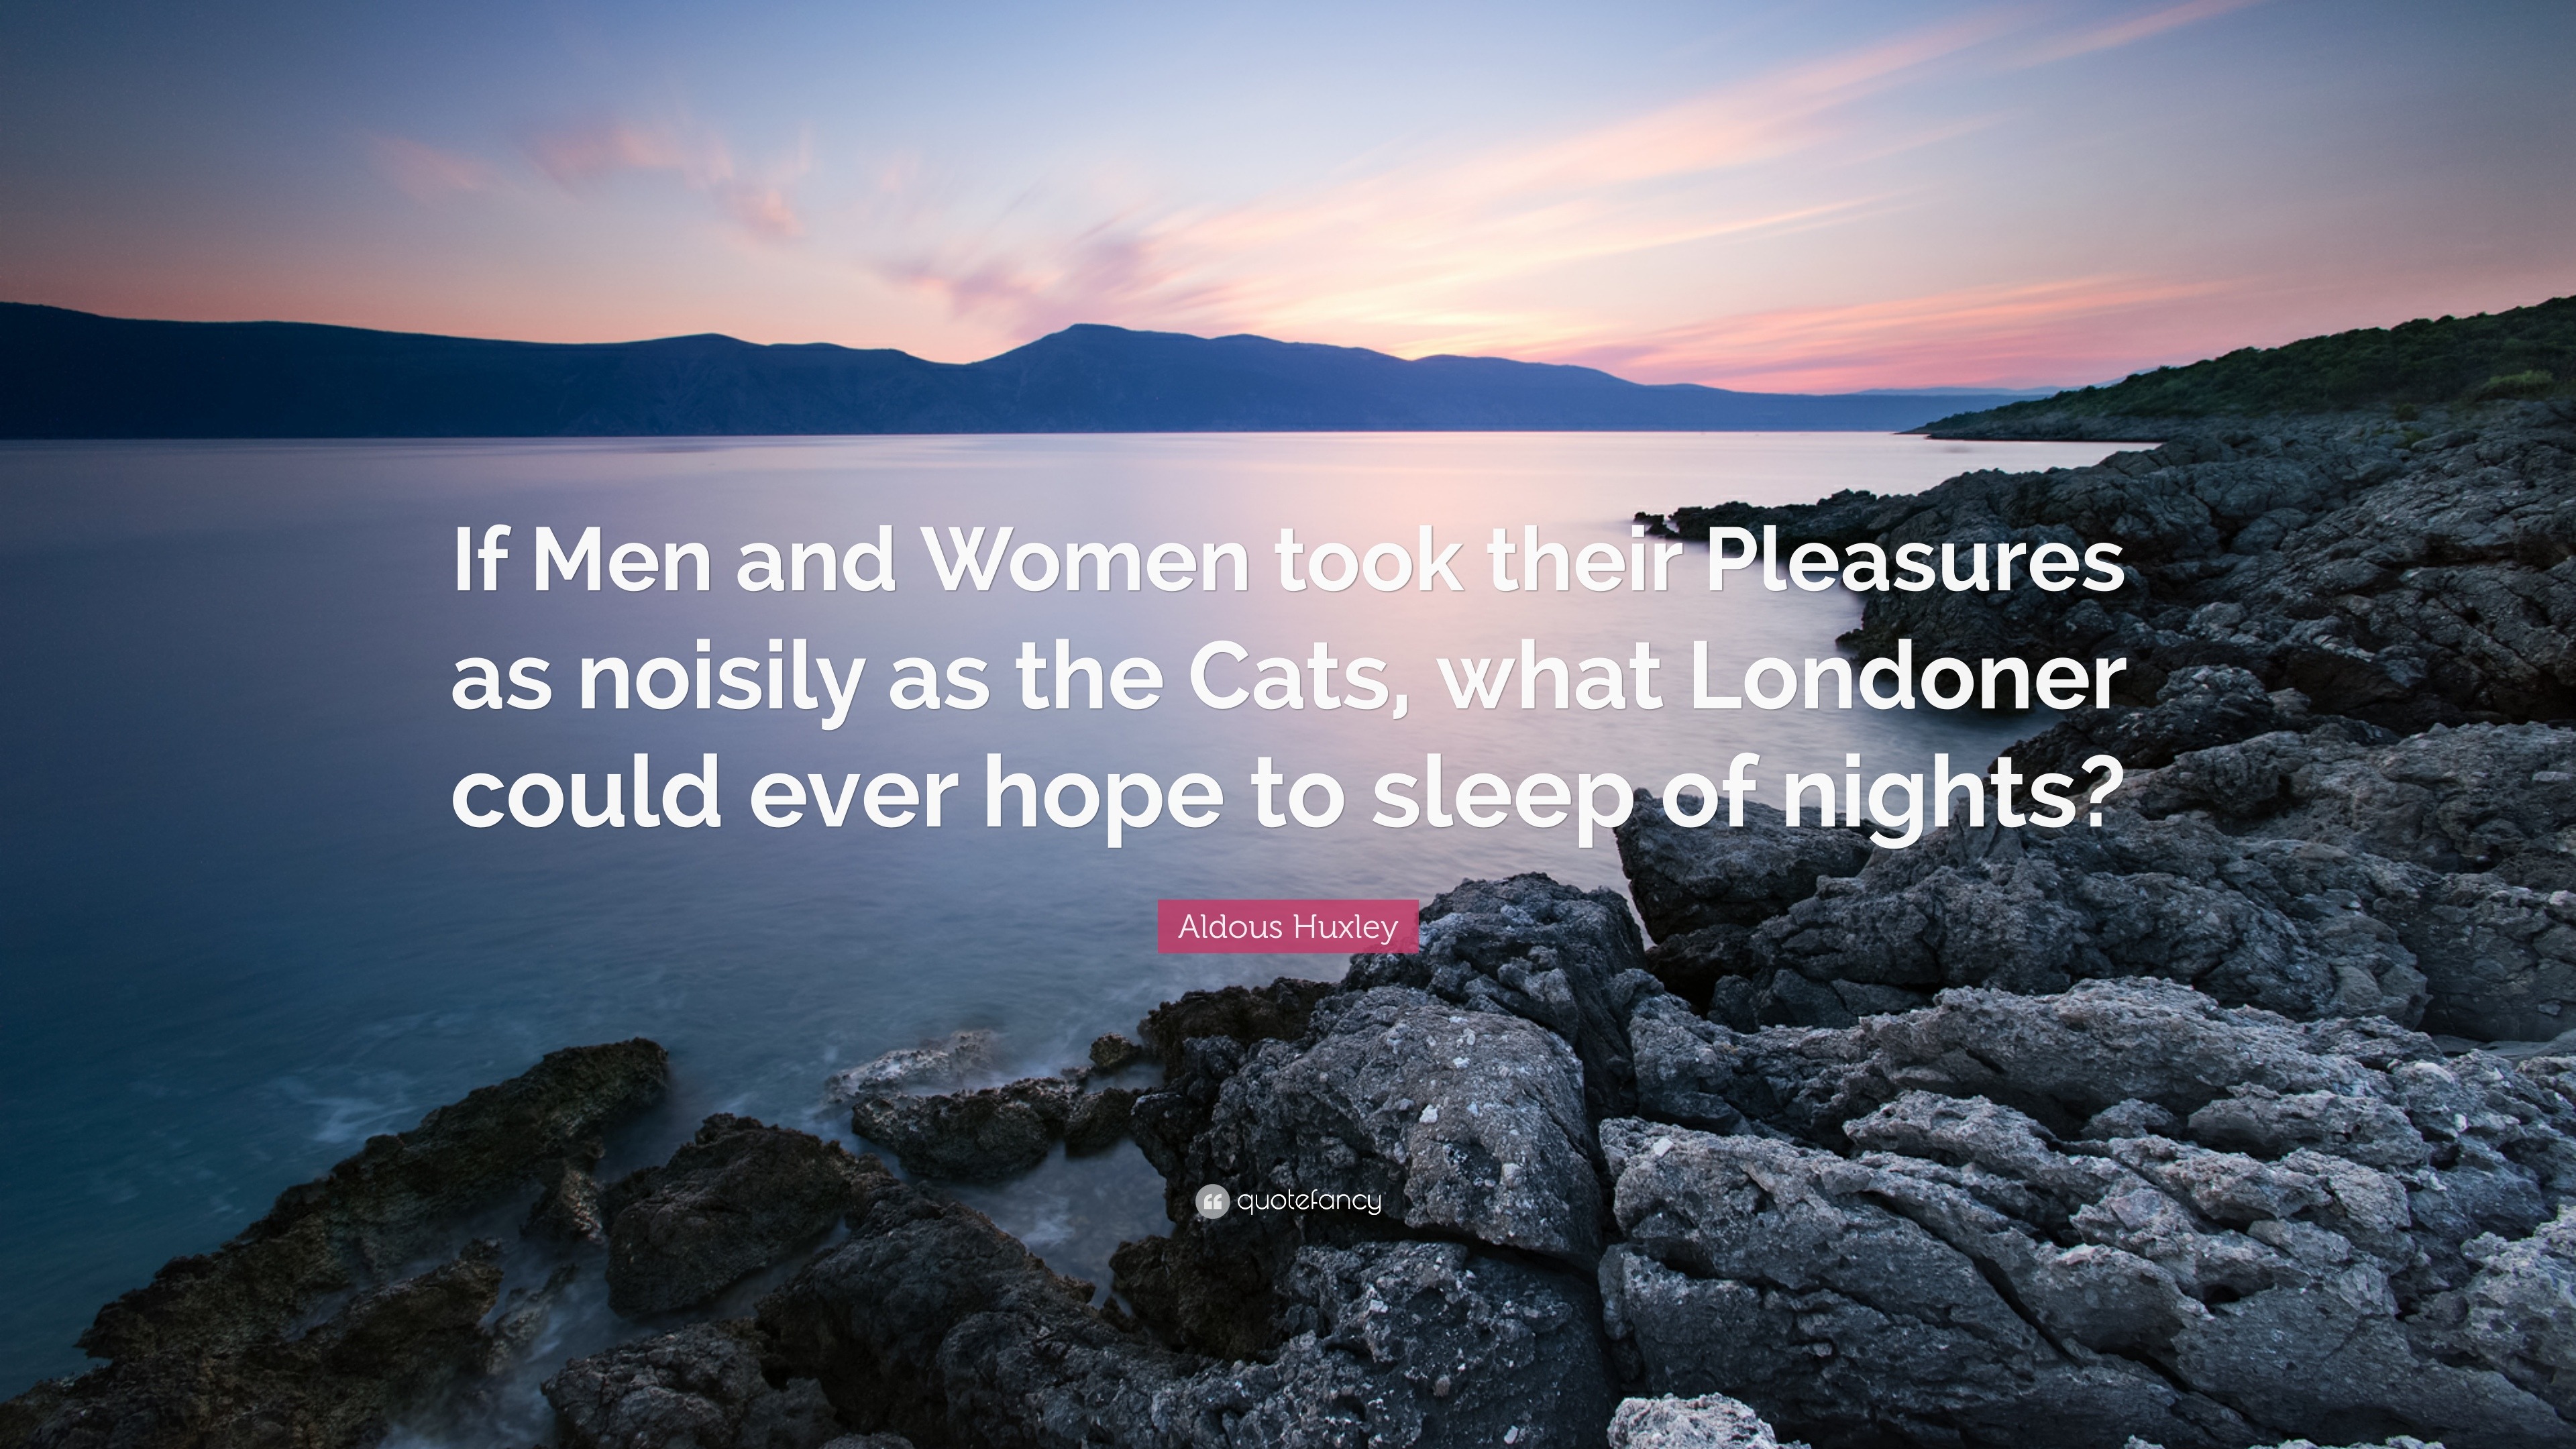 Women are a pleasure tolstoy quote